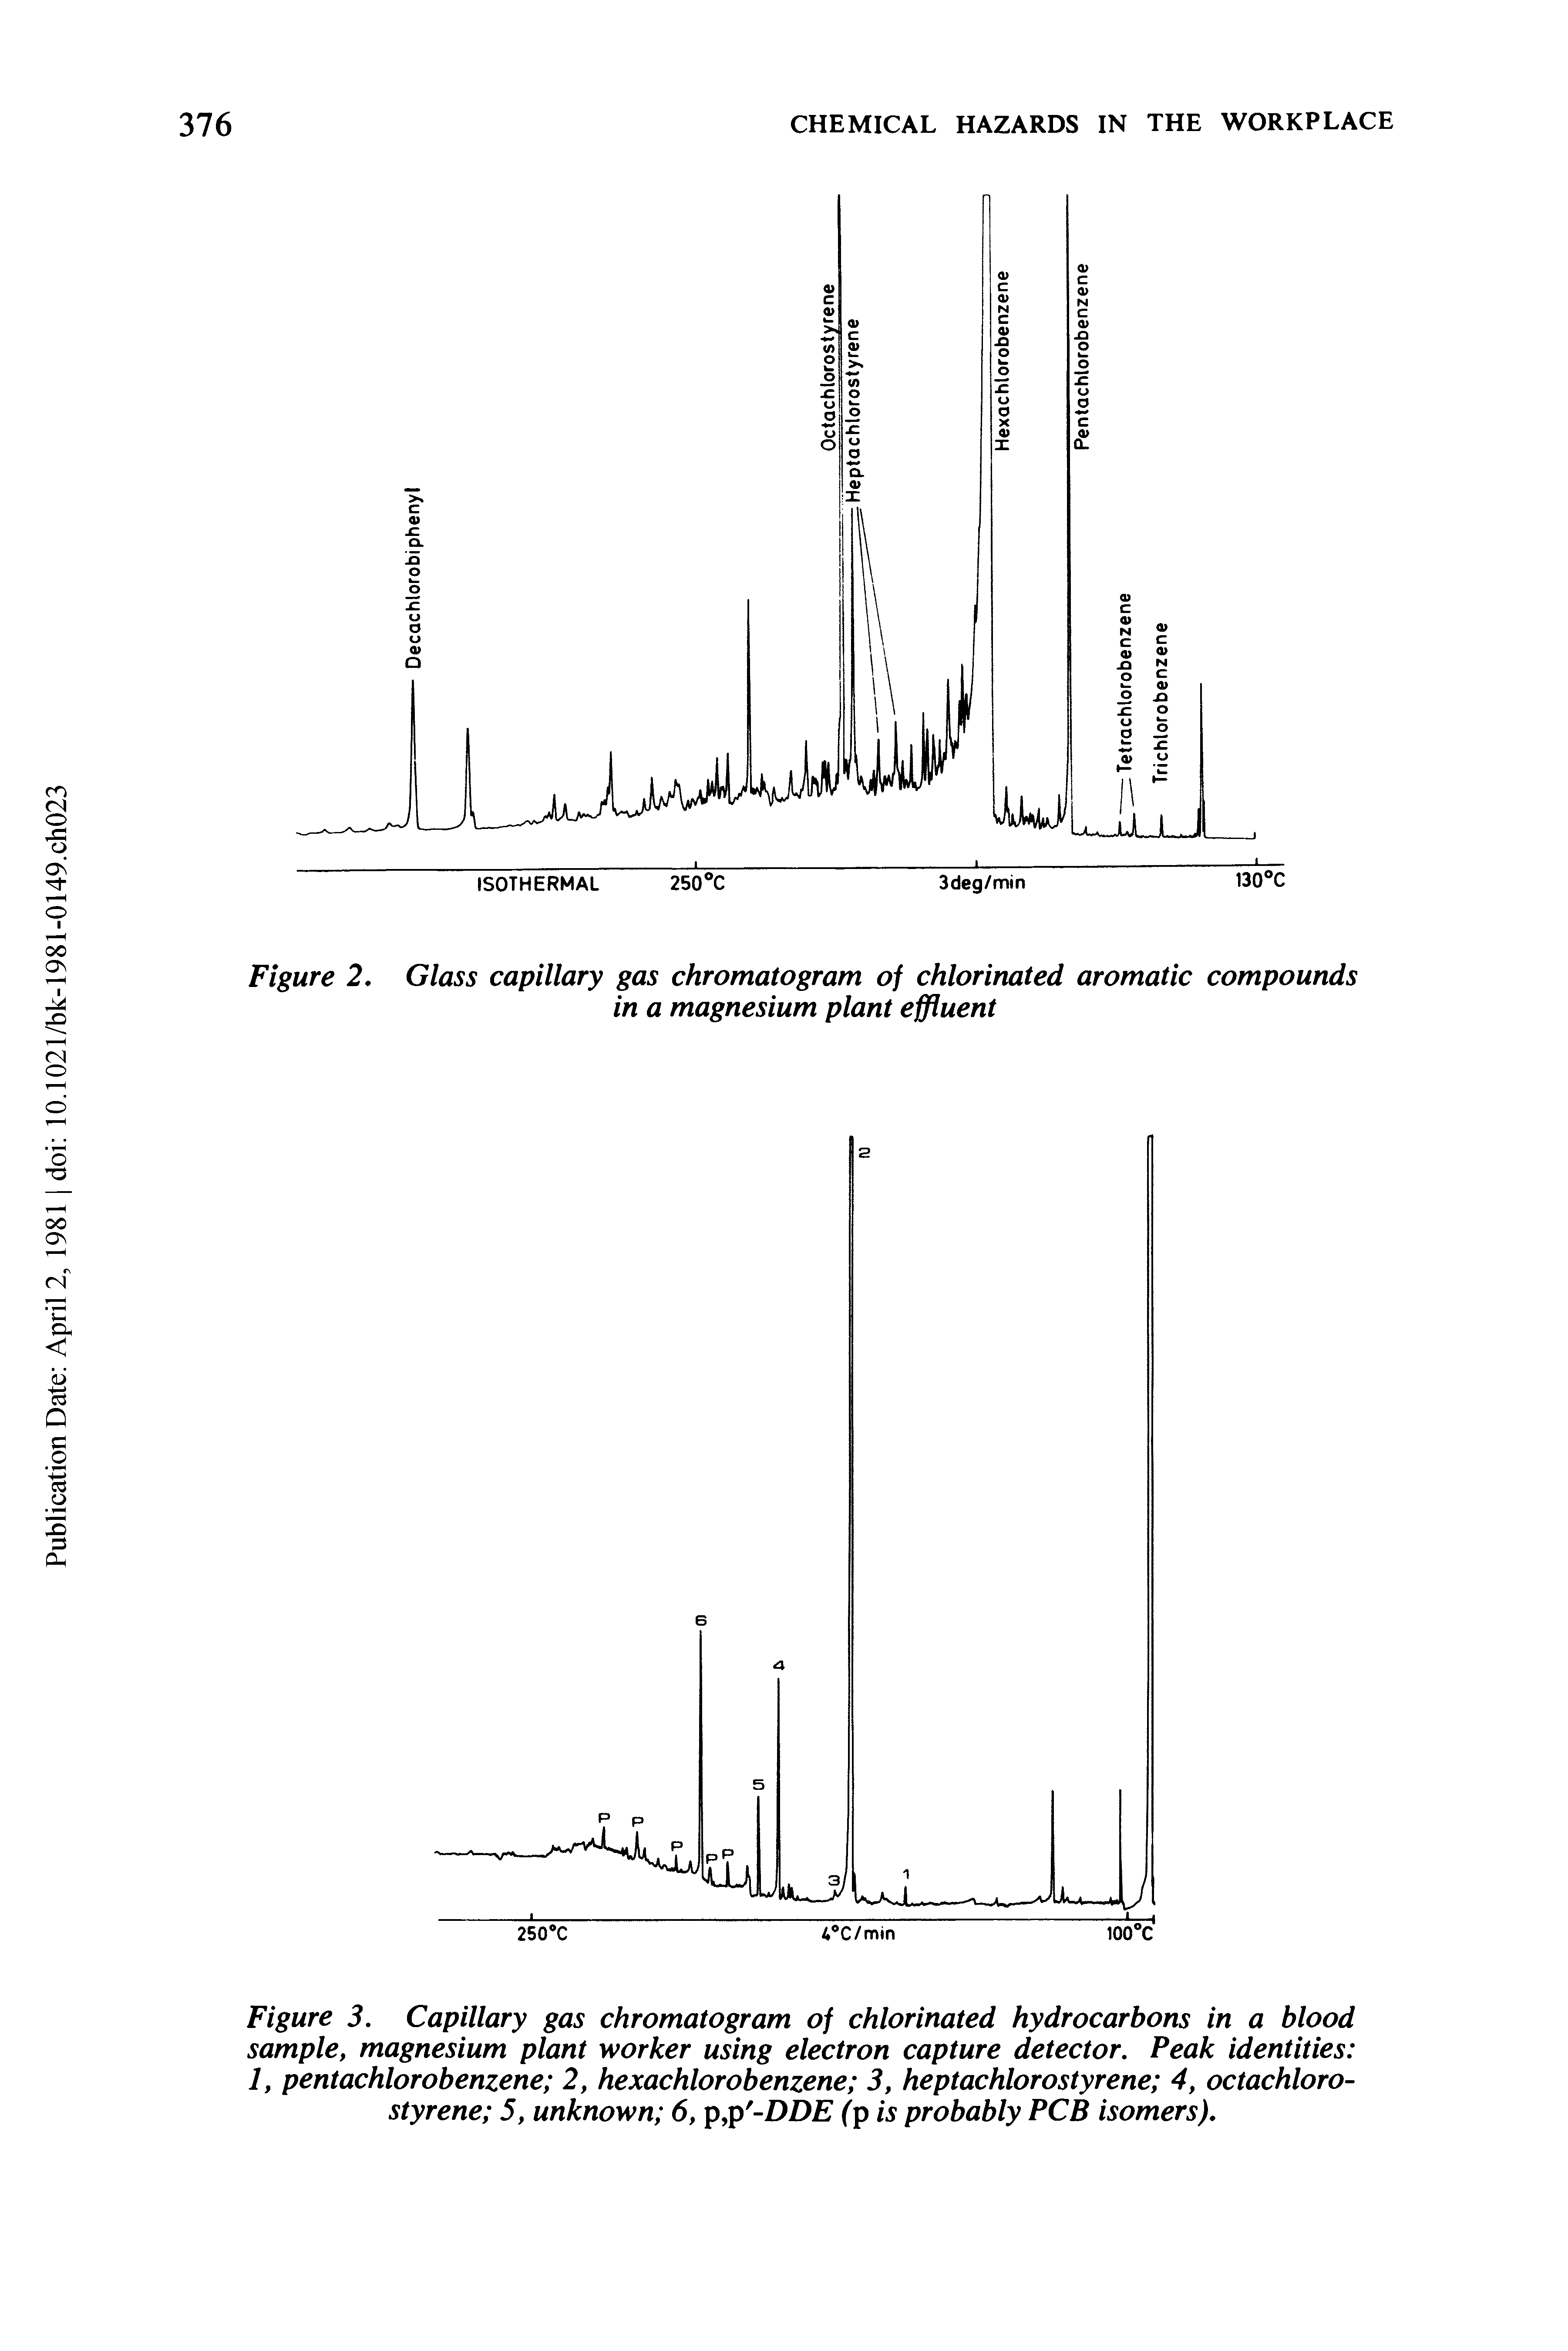 Figure 3. Capillary gas chromatogram of chlorinated hydrocarbons in a blood sample, magnesium plant worker using electron capture detector. Peak identities 1, pentachlorobenzene 2, hexachlorobenzene 3, heptachlorostyrene 4, octachloro-styrene 5, unknown 6, p,p -DDE (p is probably PCB isomers).